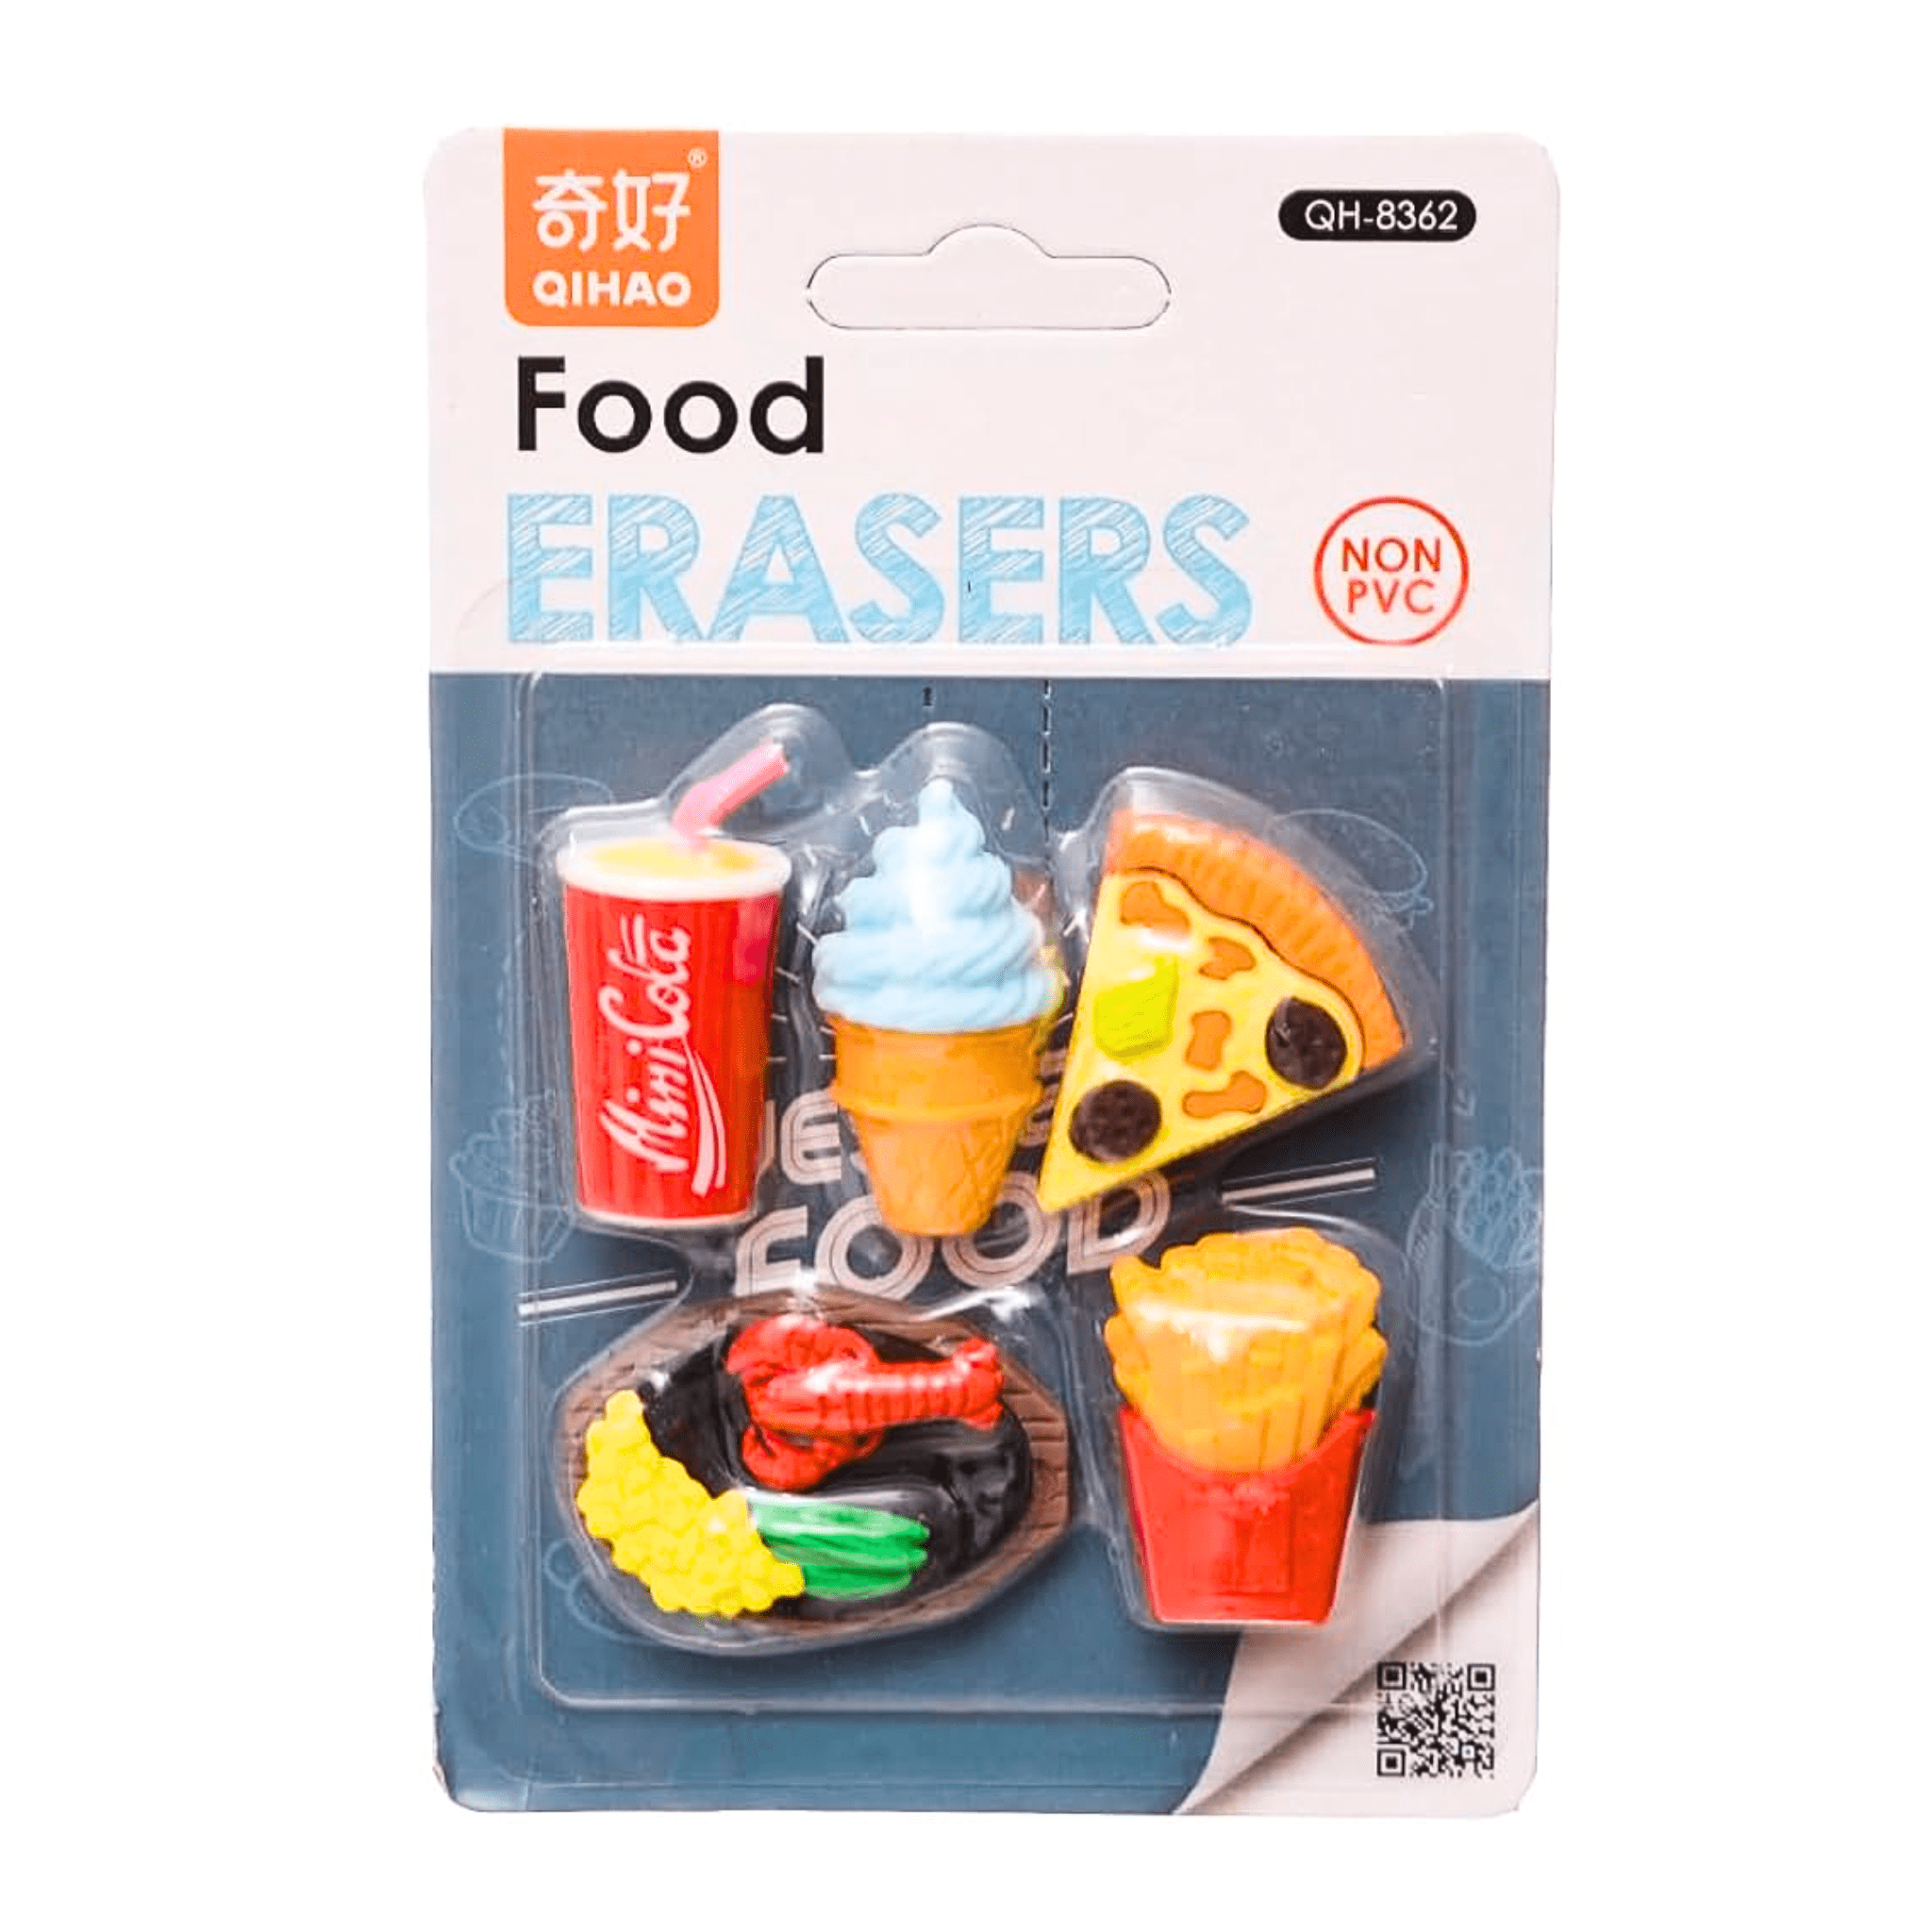 Qihao Fast Food Eraser Set